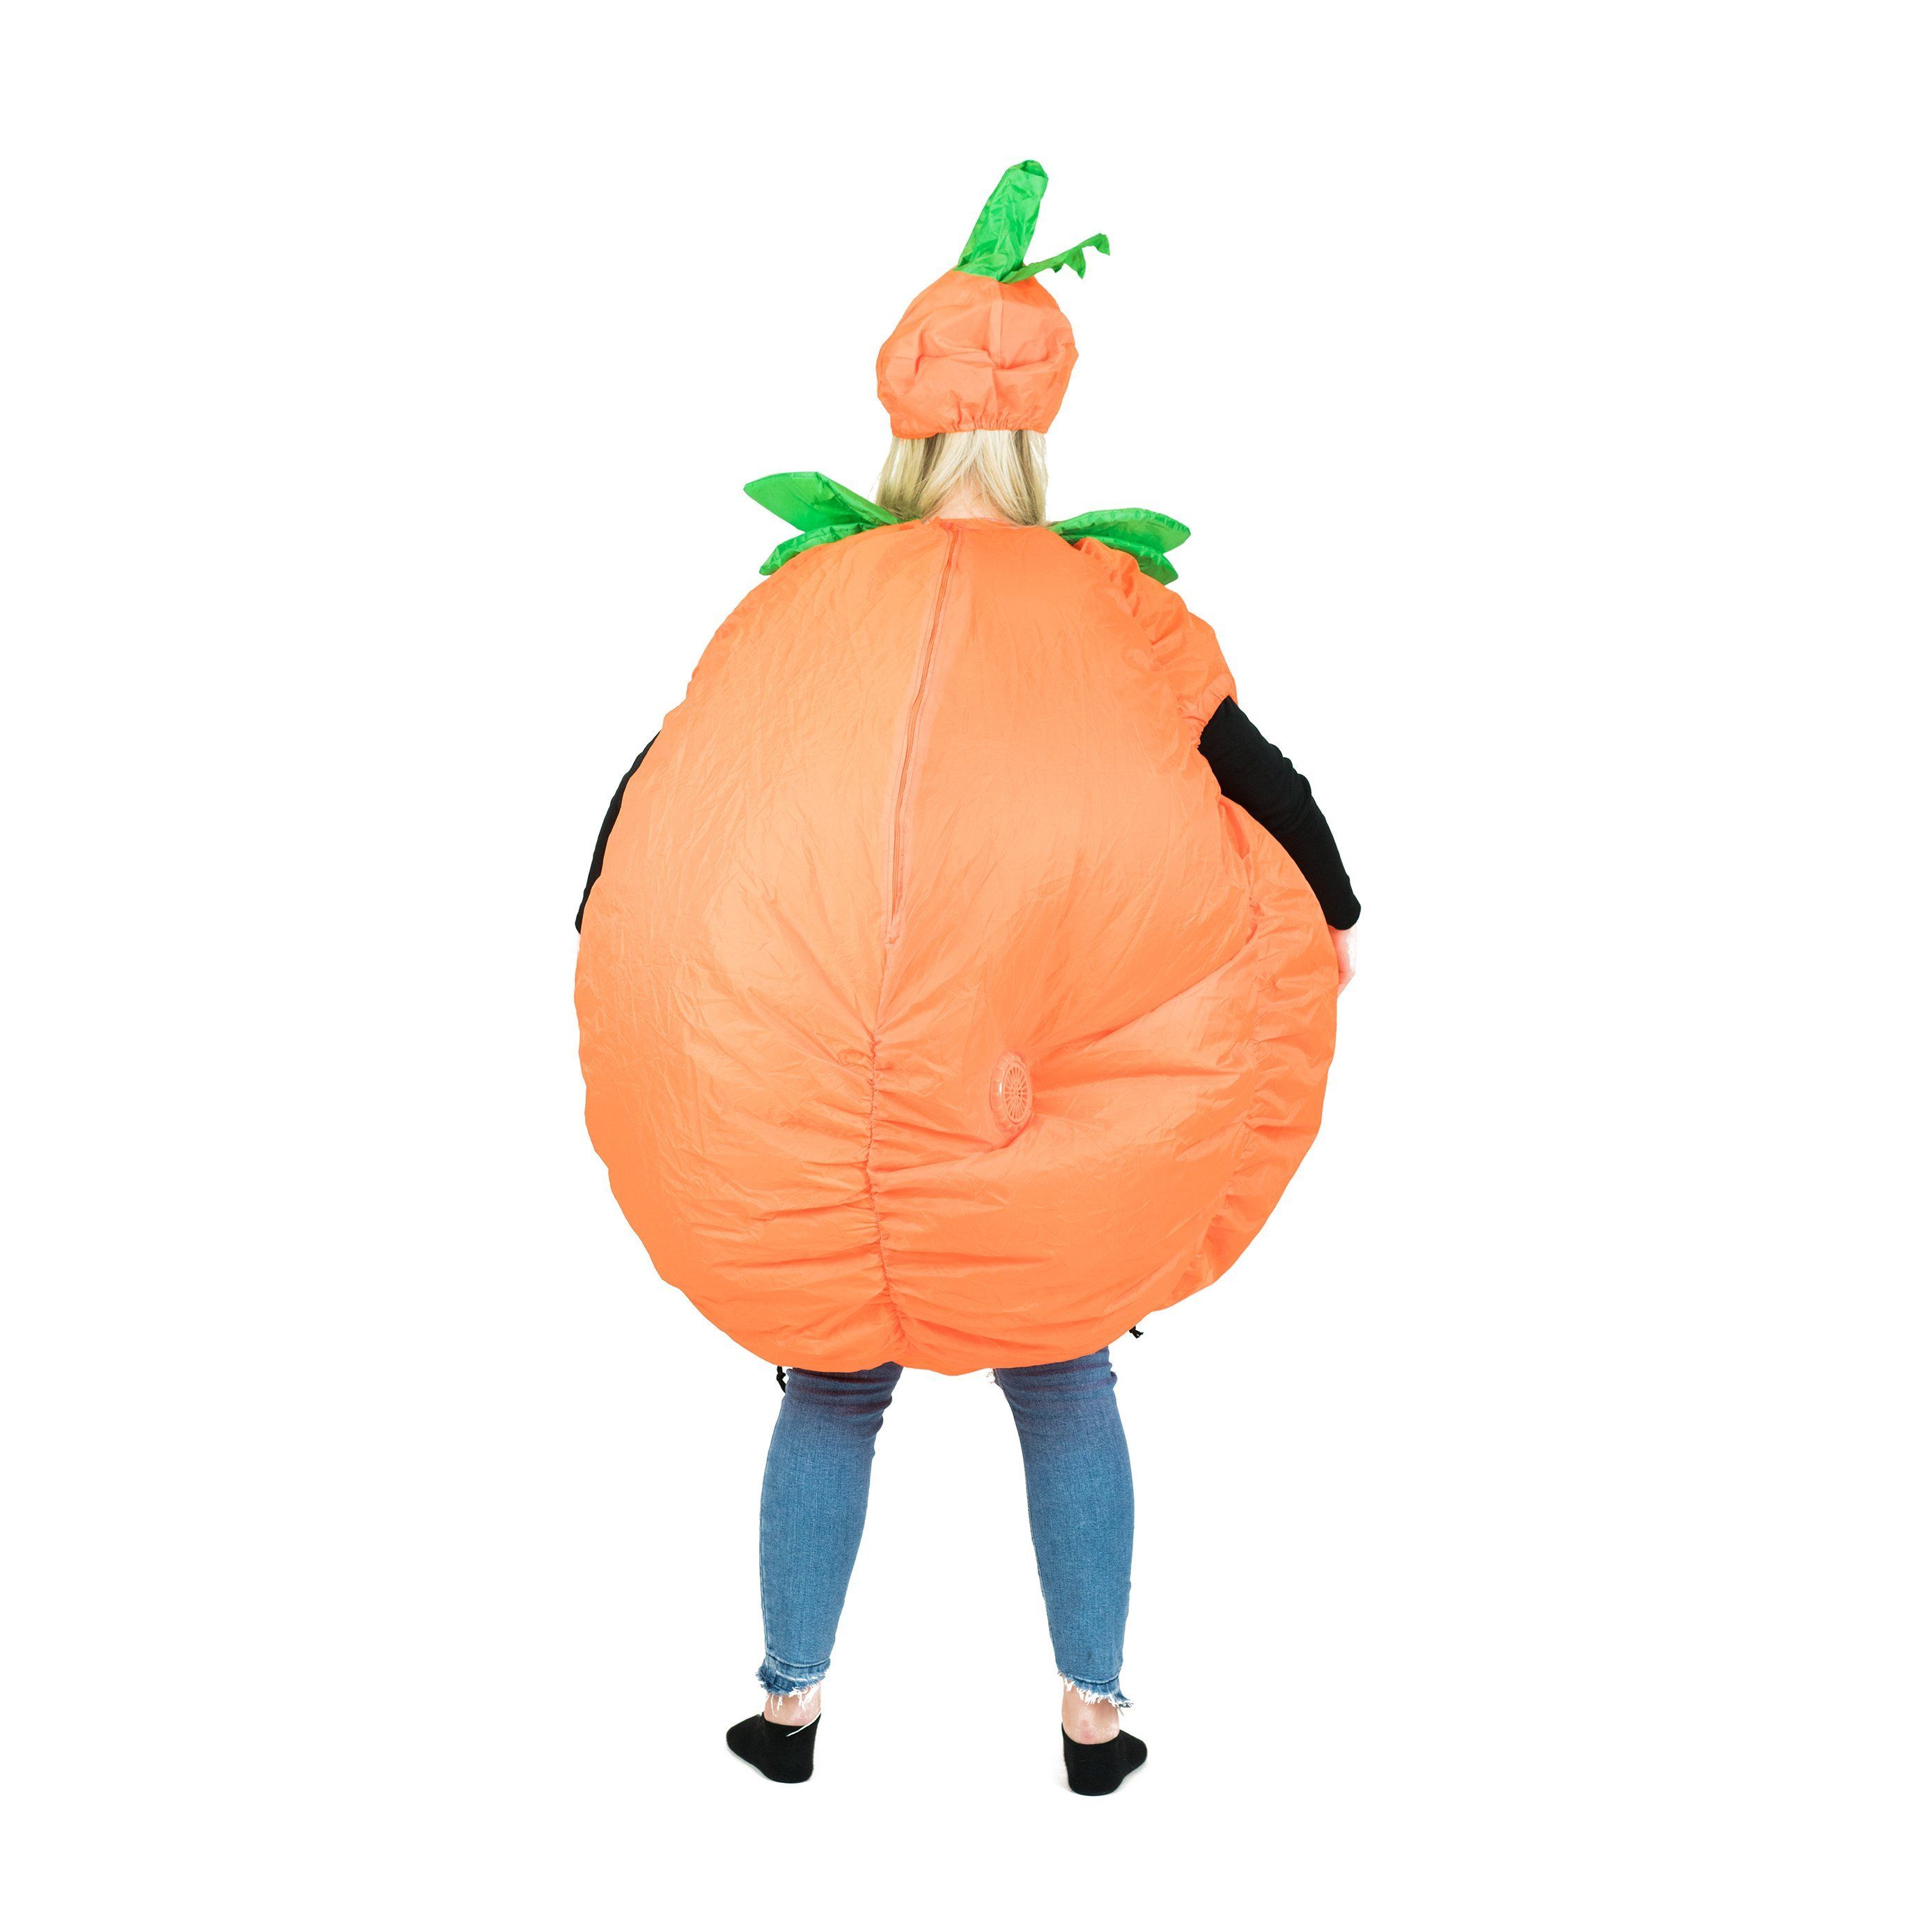 Fancy Dress - Inflatable Pumpkin Costume